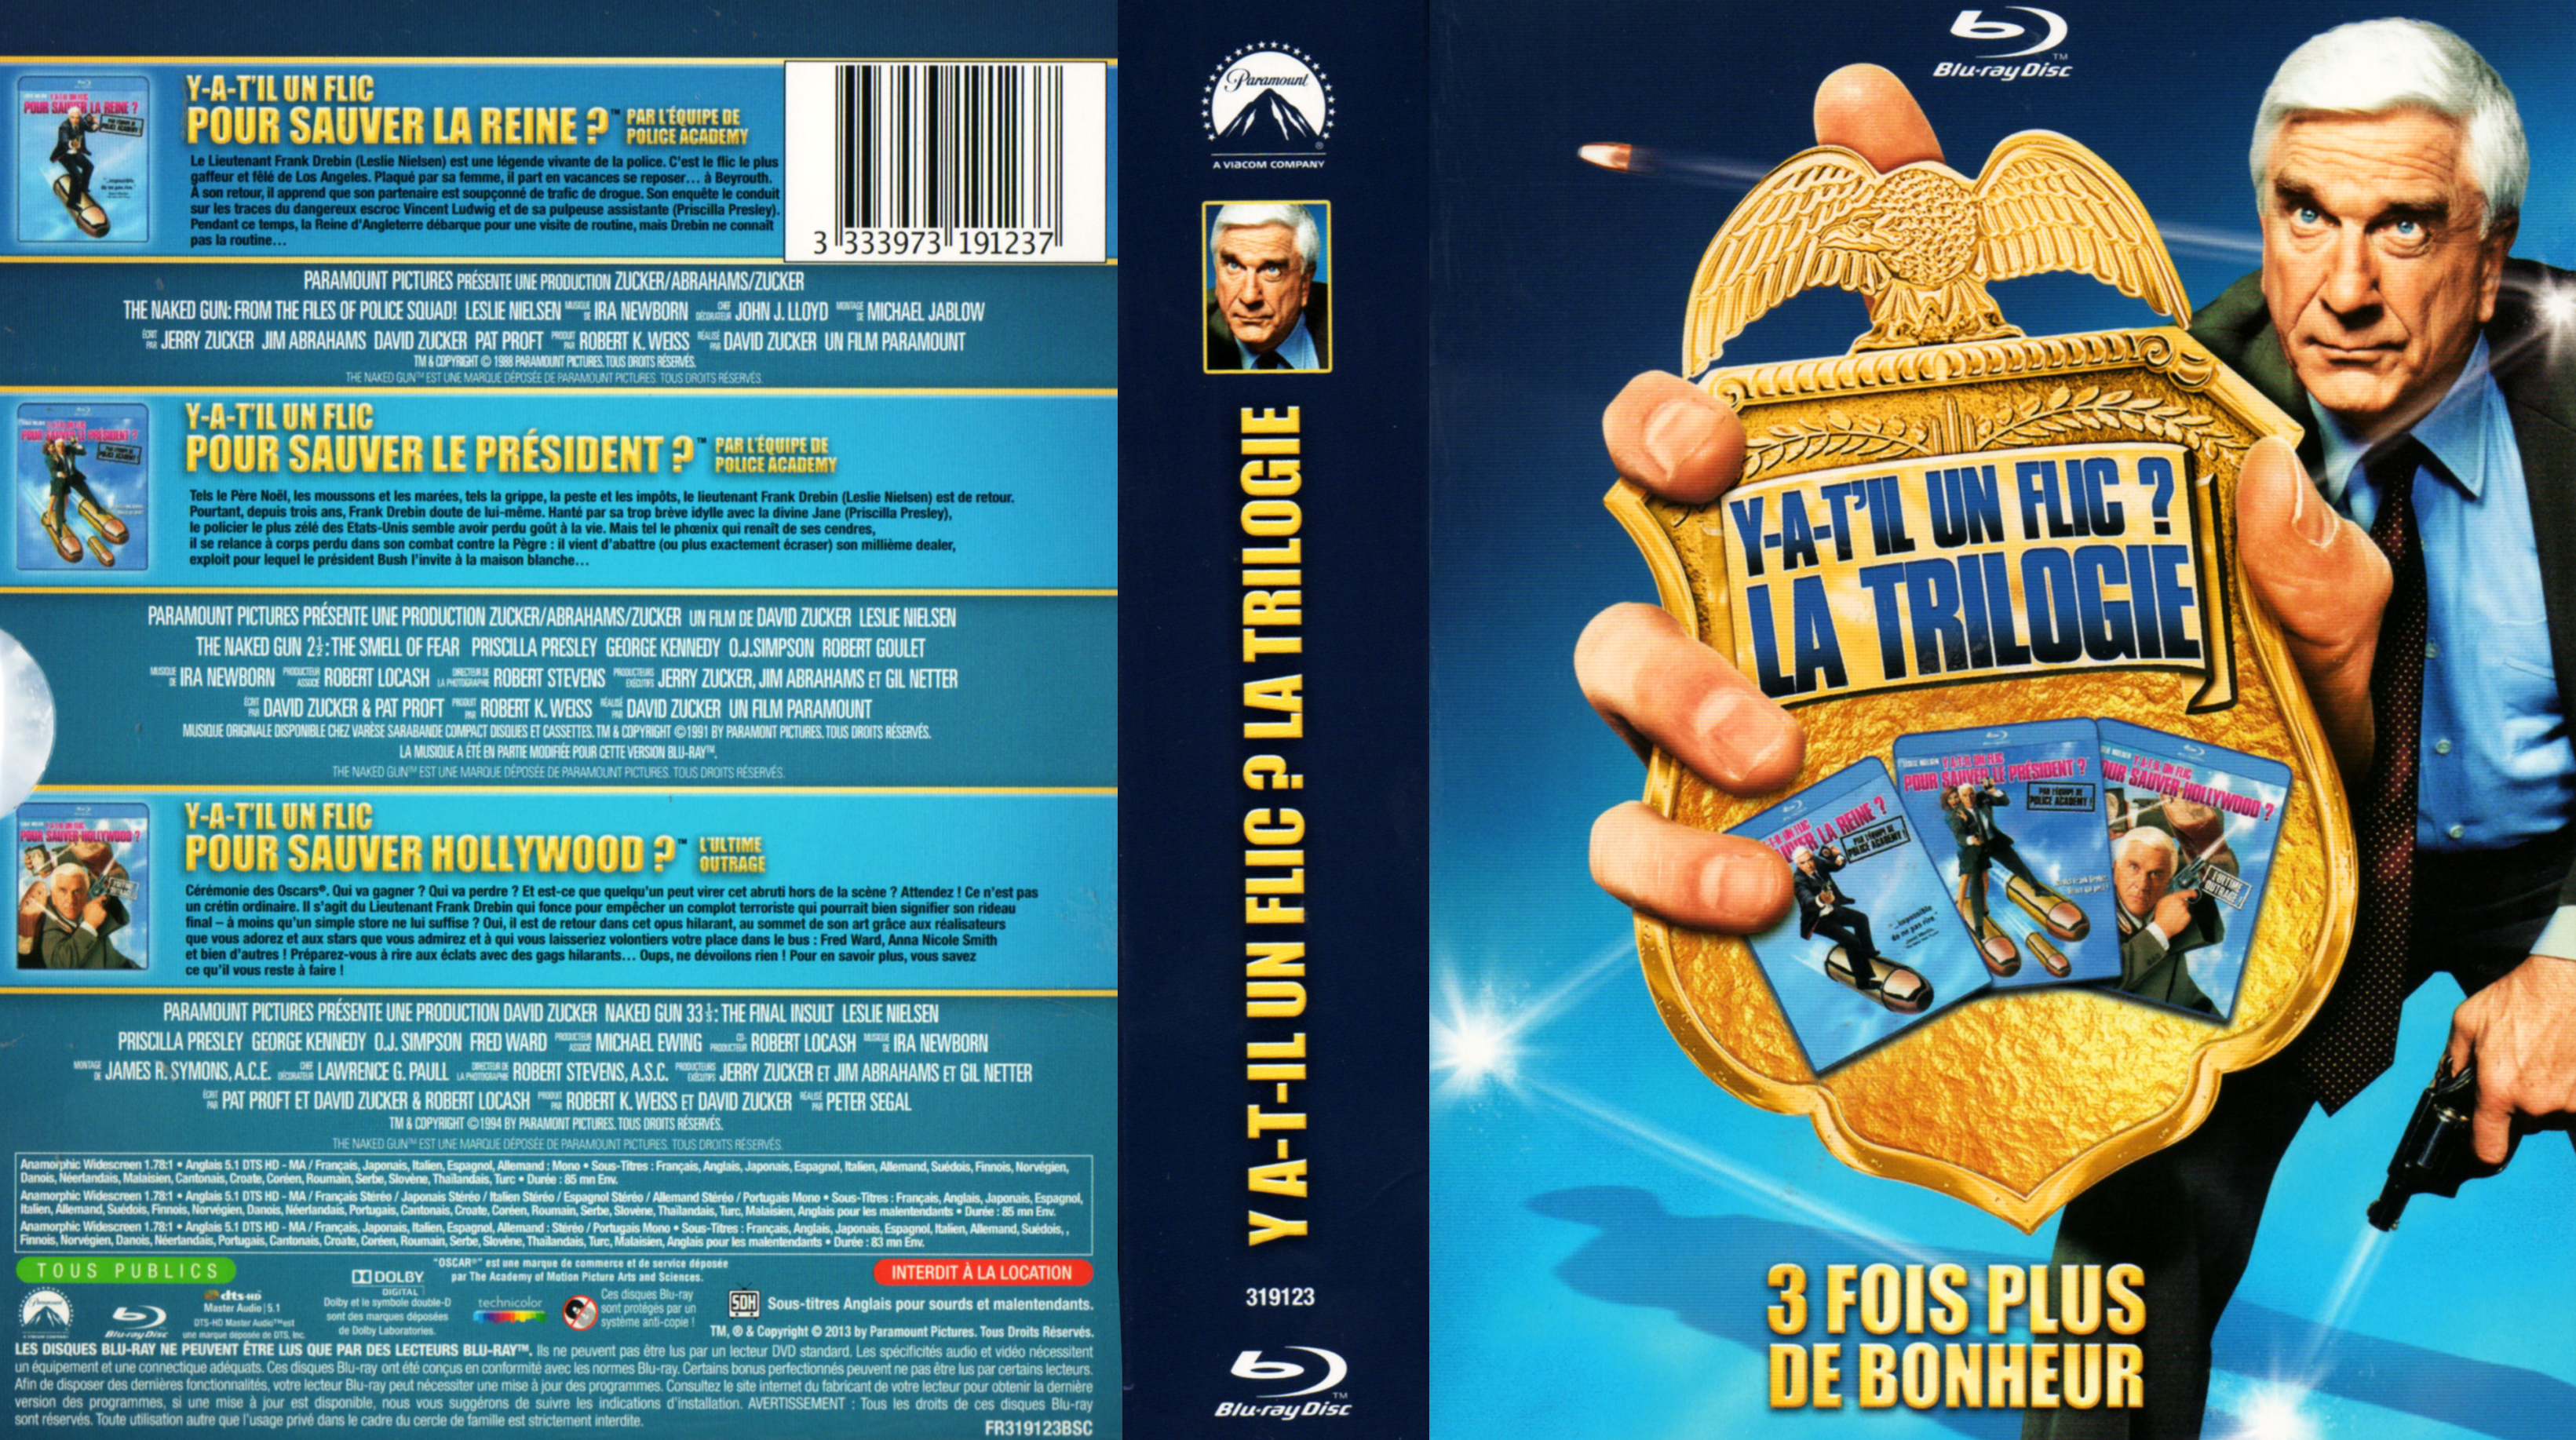 Jaquette DVD Y a-t-il un flic Trilogie (BLU-RAY)